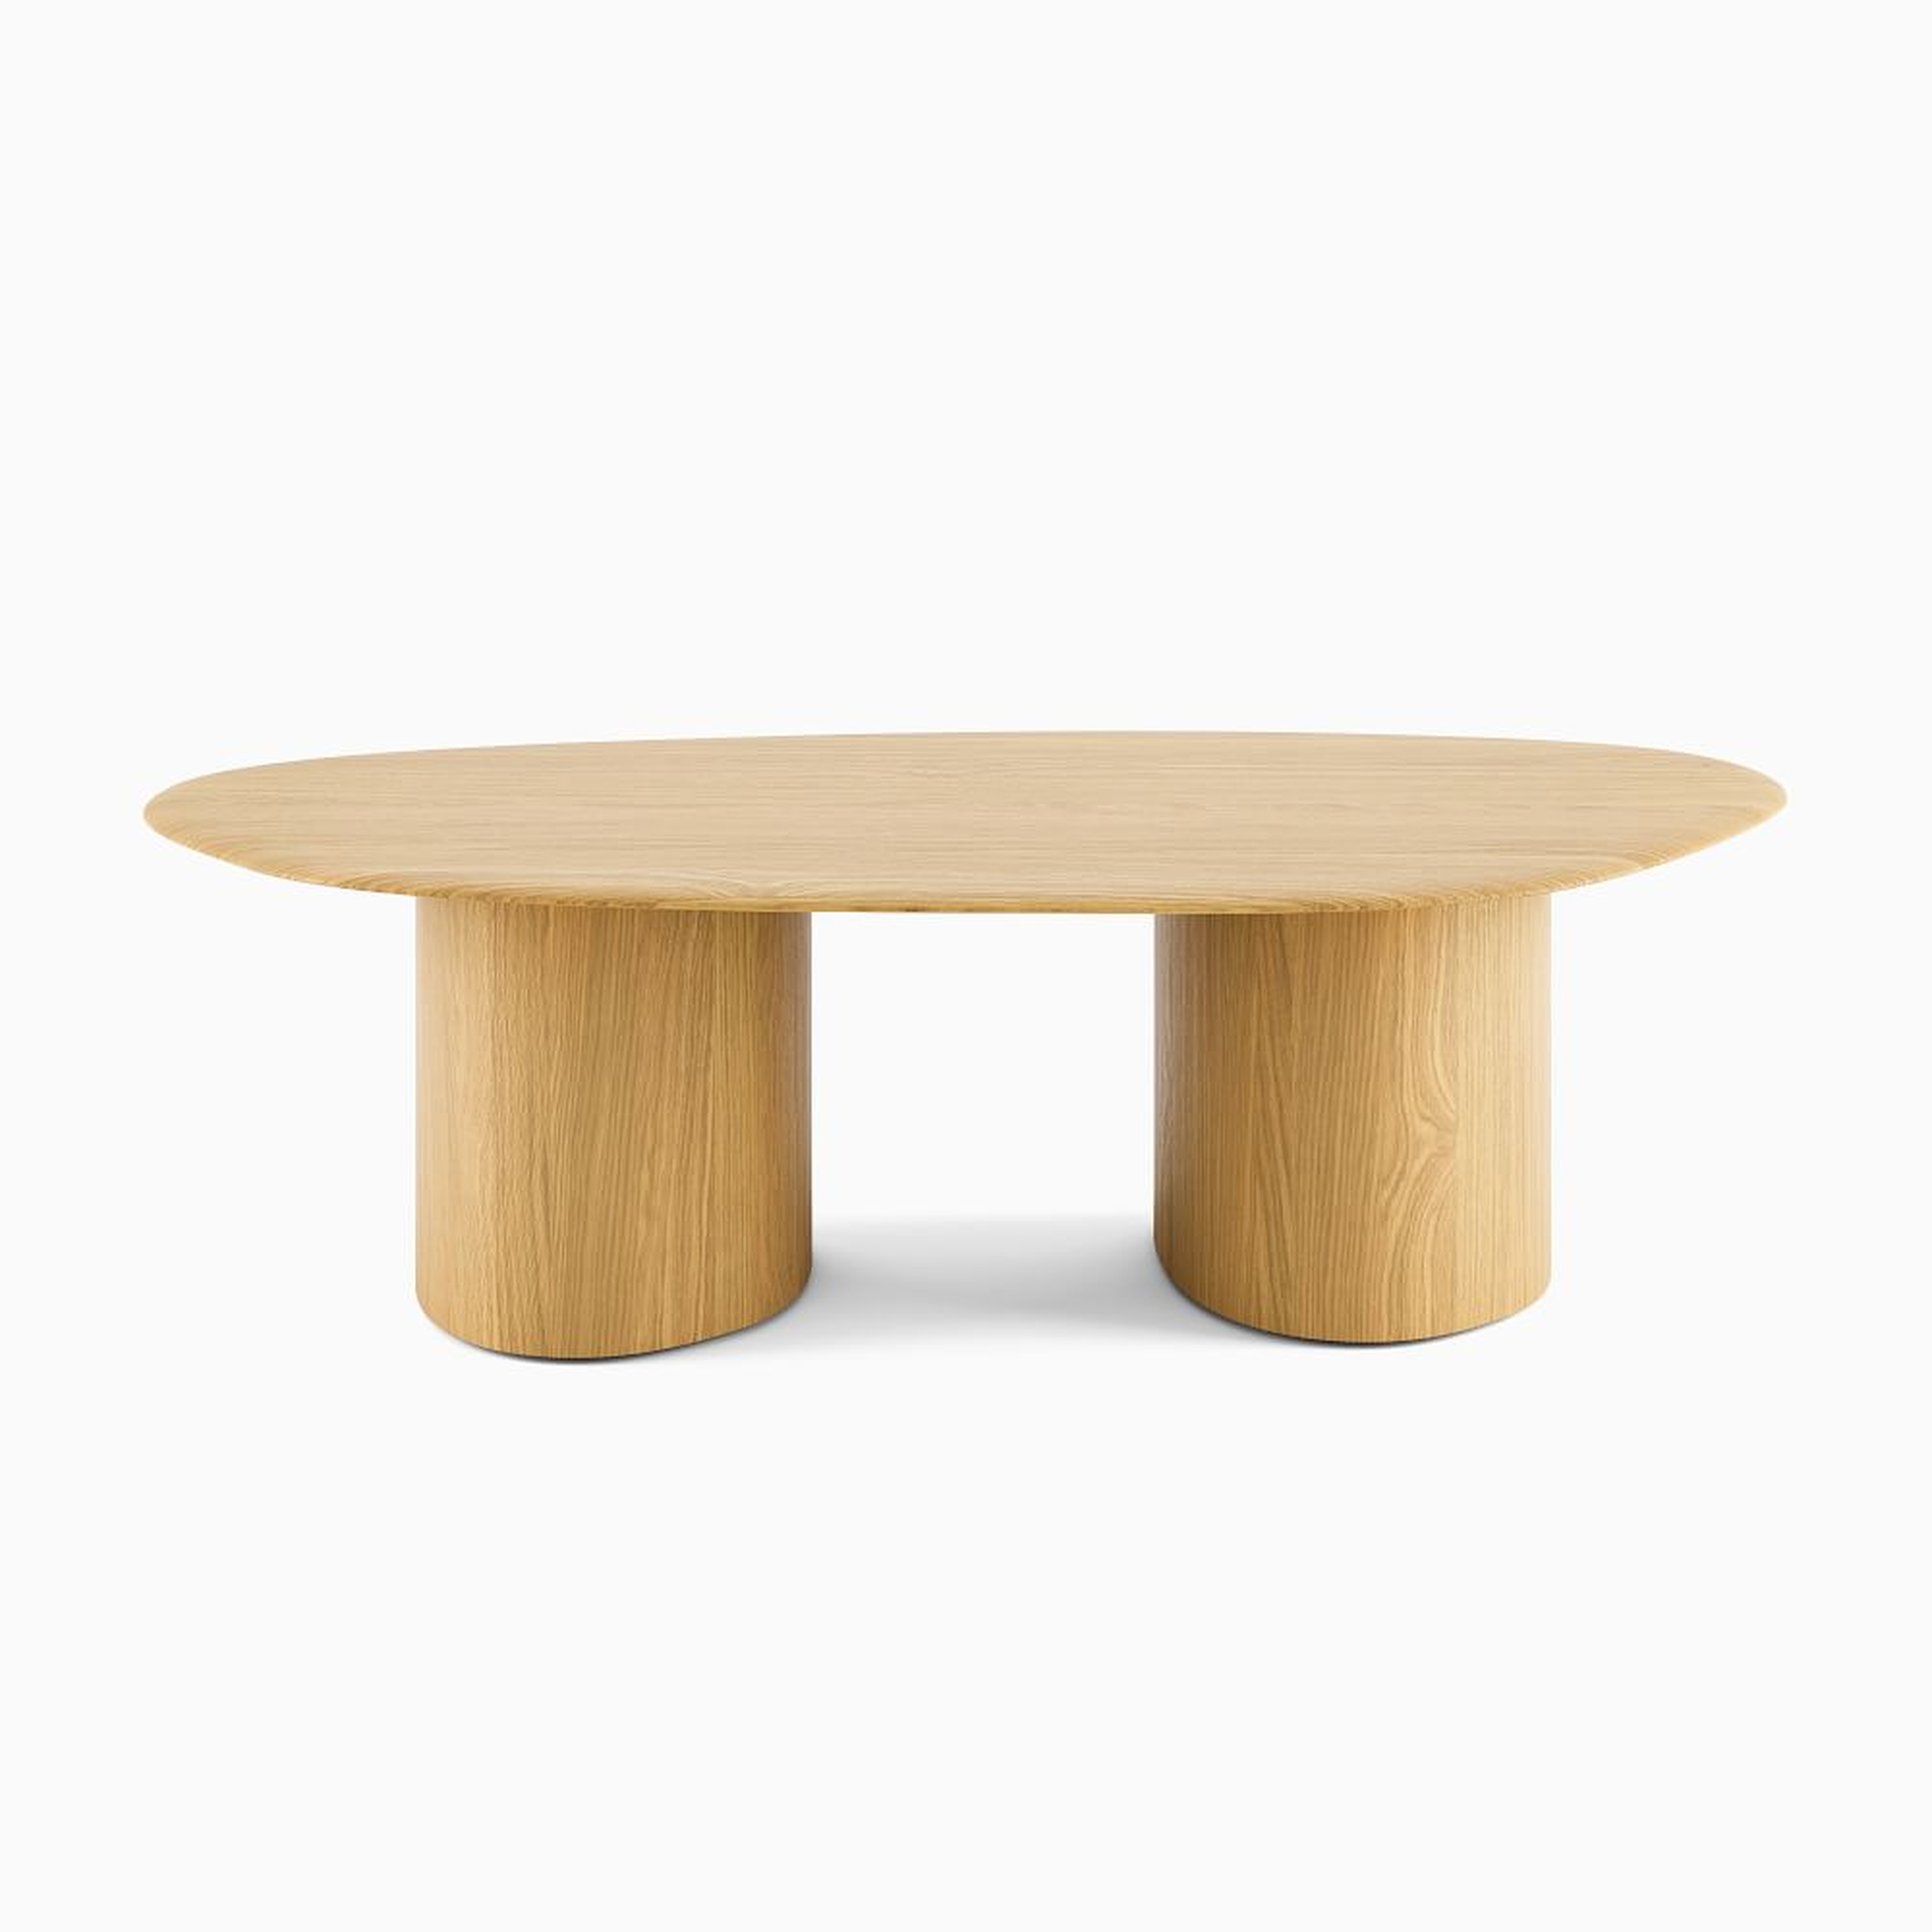 Organic Modular Table, Sand on Oak, Large - West Elm